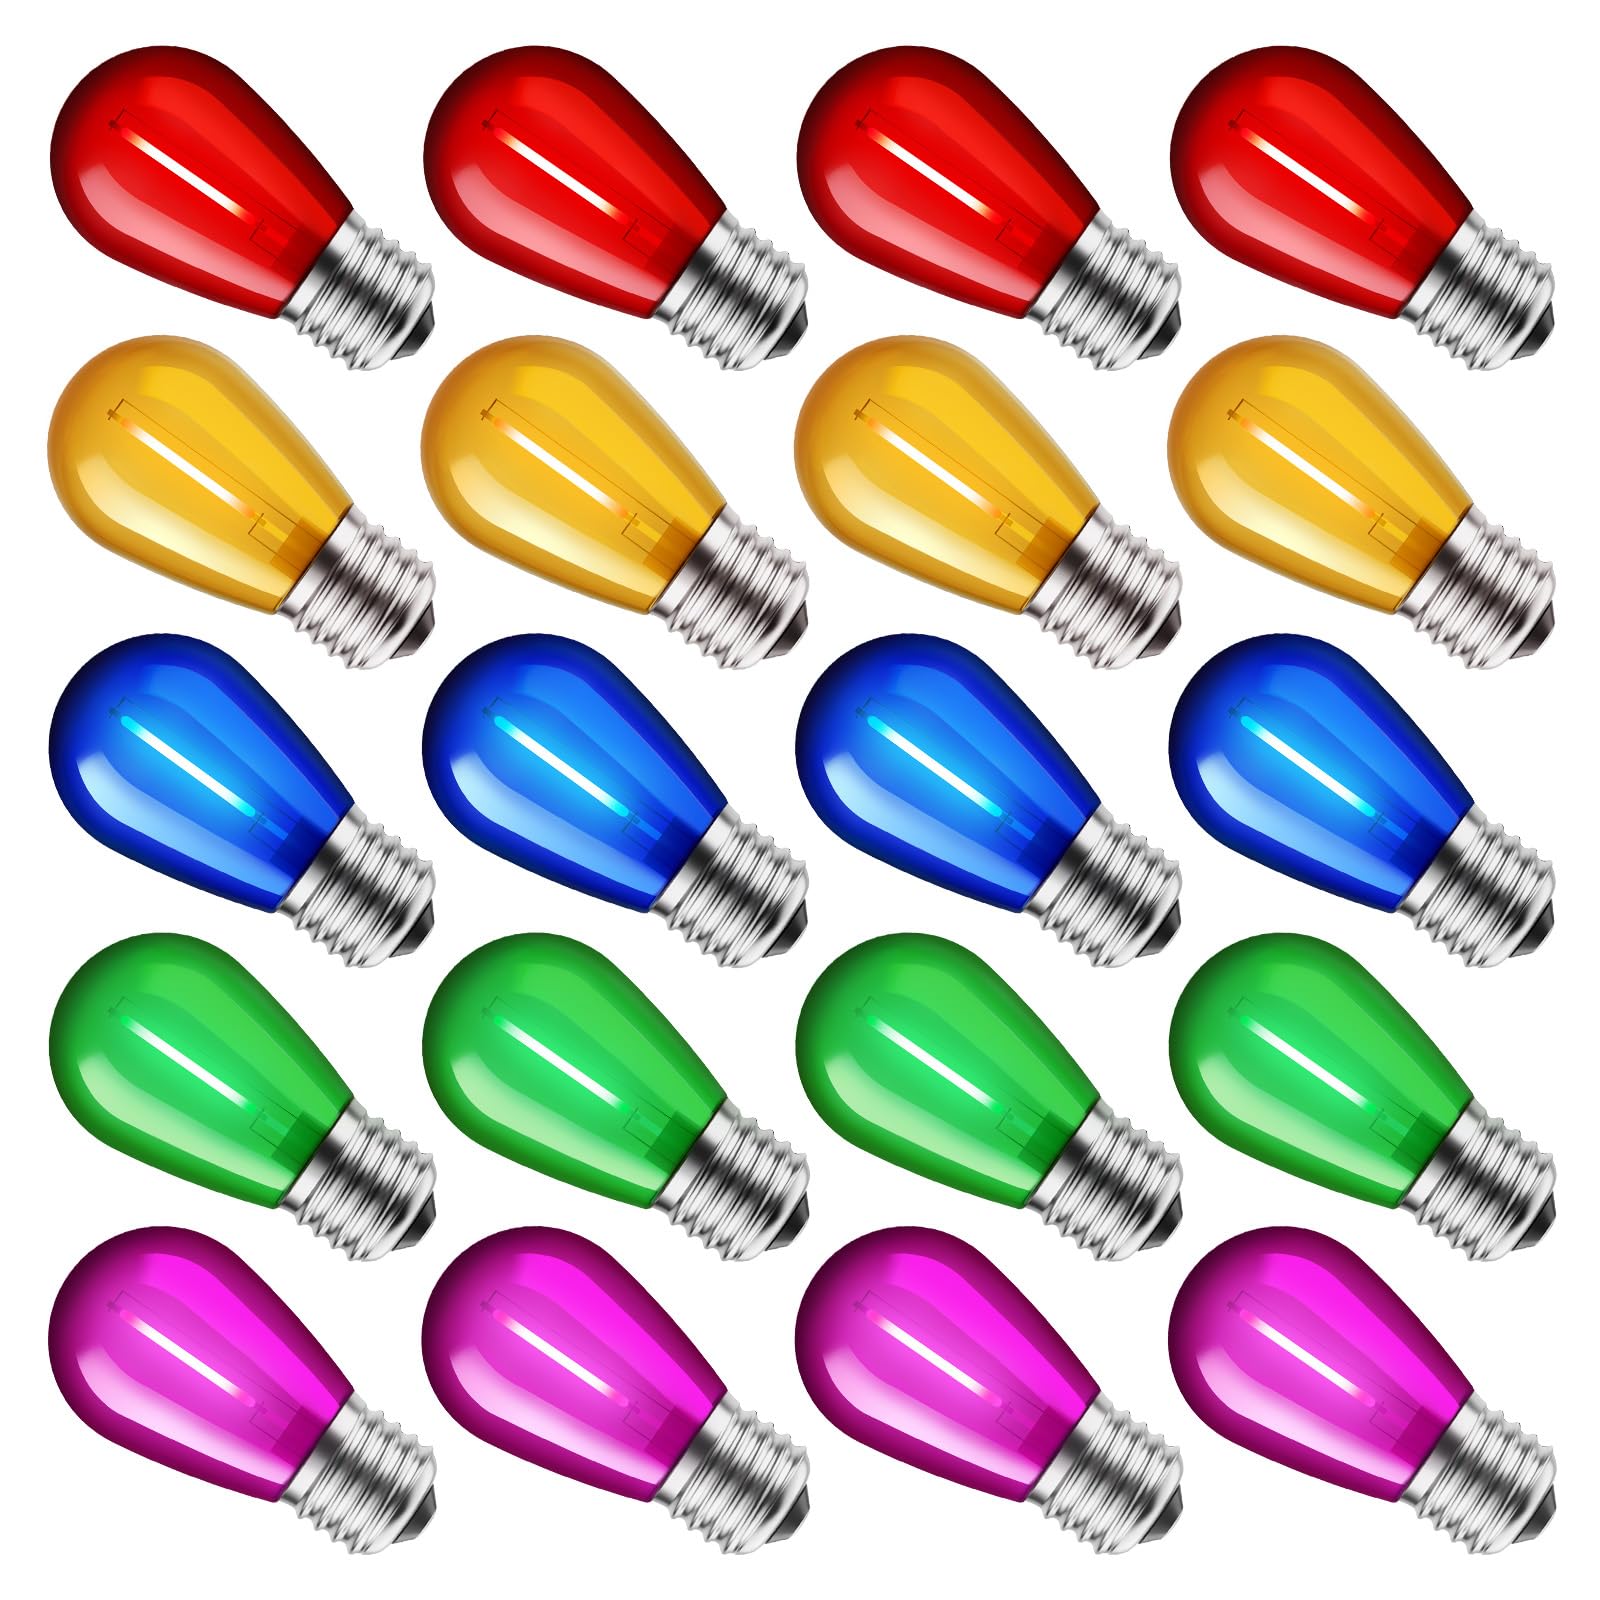 20 Count / LED Bulbs / Multicolor